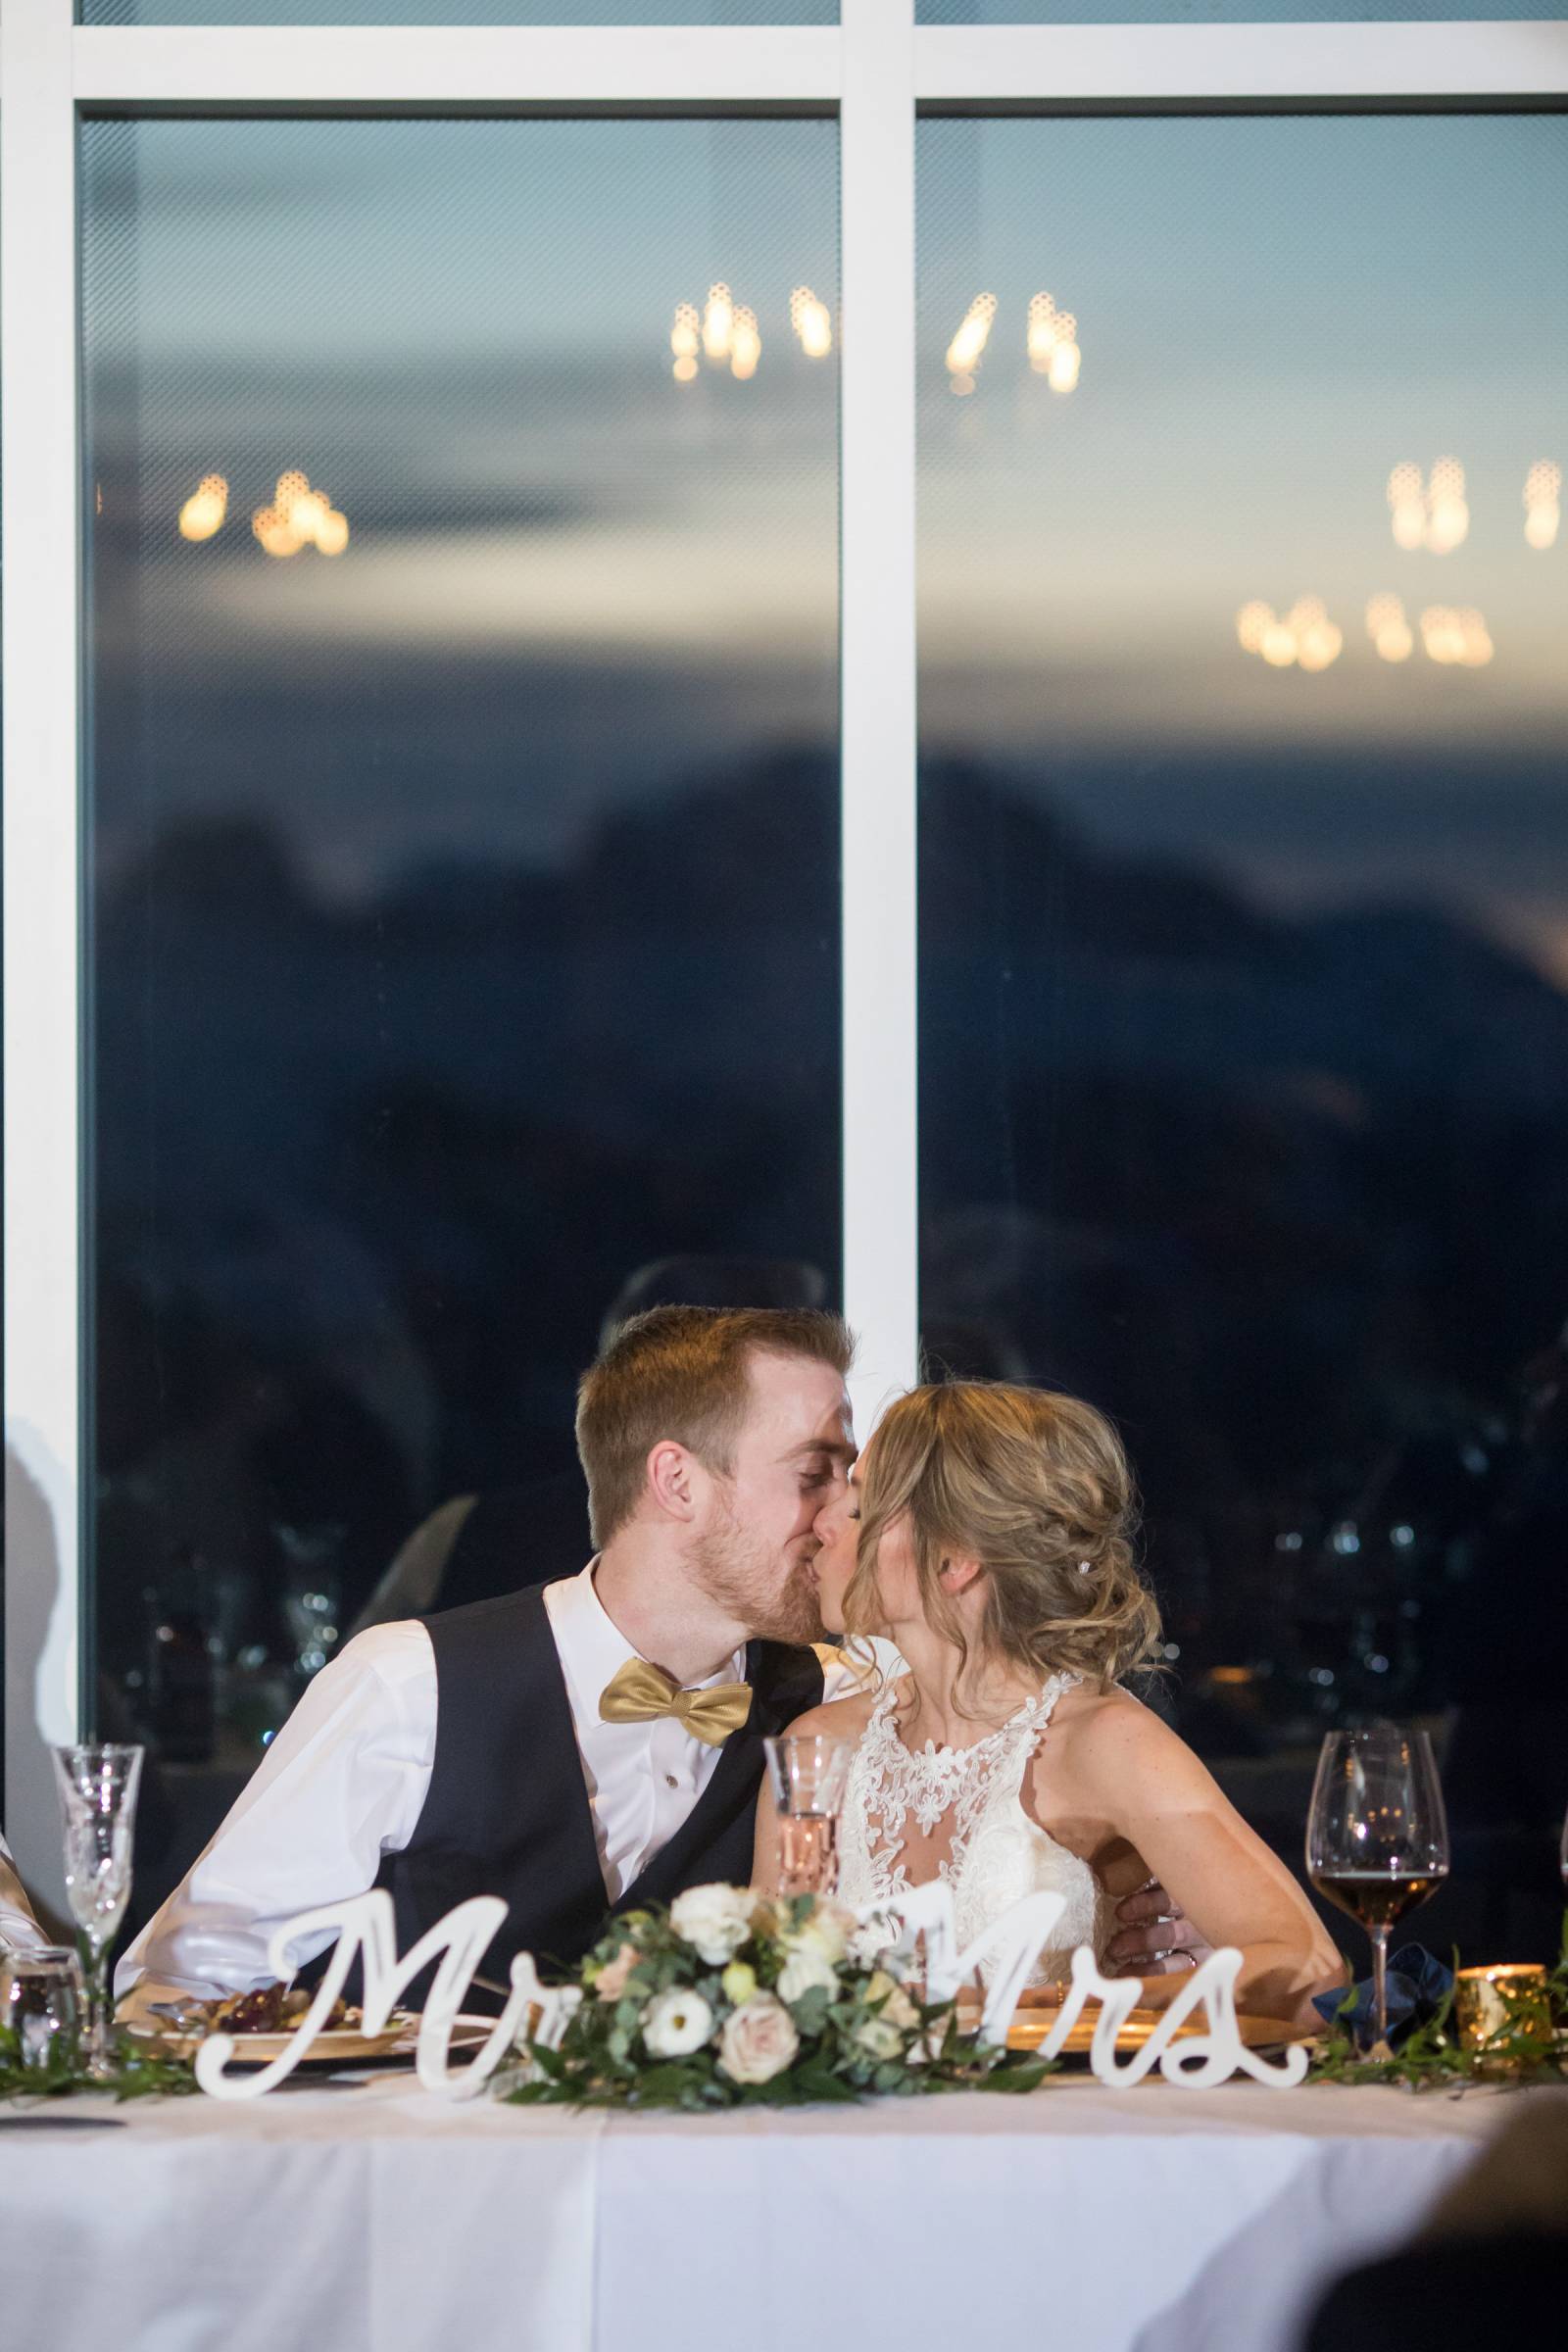 Banff Gondola Sky Bistro Wedding, Sky Bistro Wedding Reception, Bride and groom first dance, Banff w